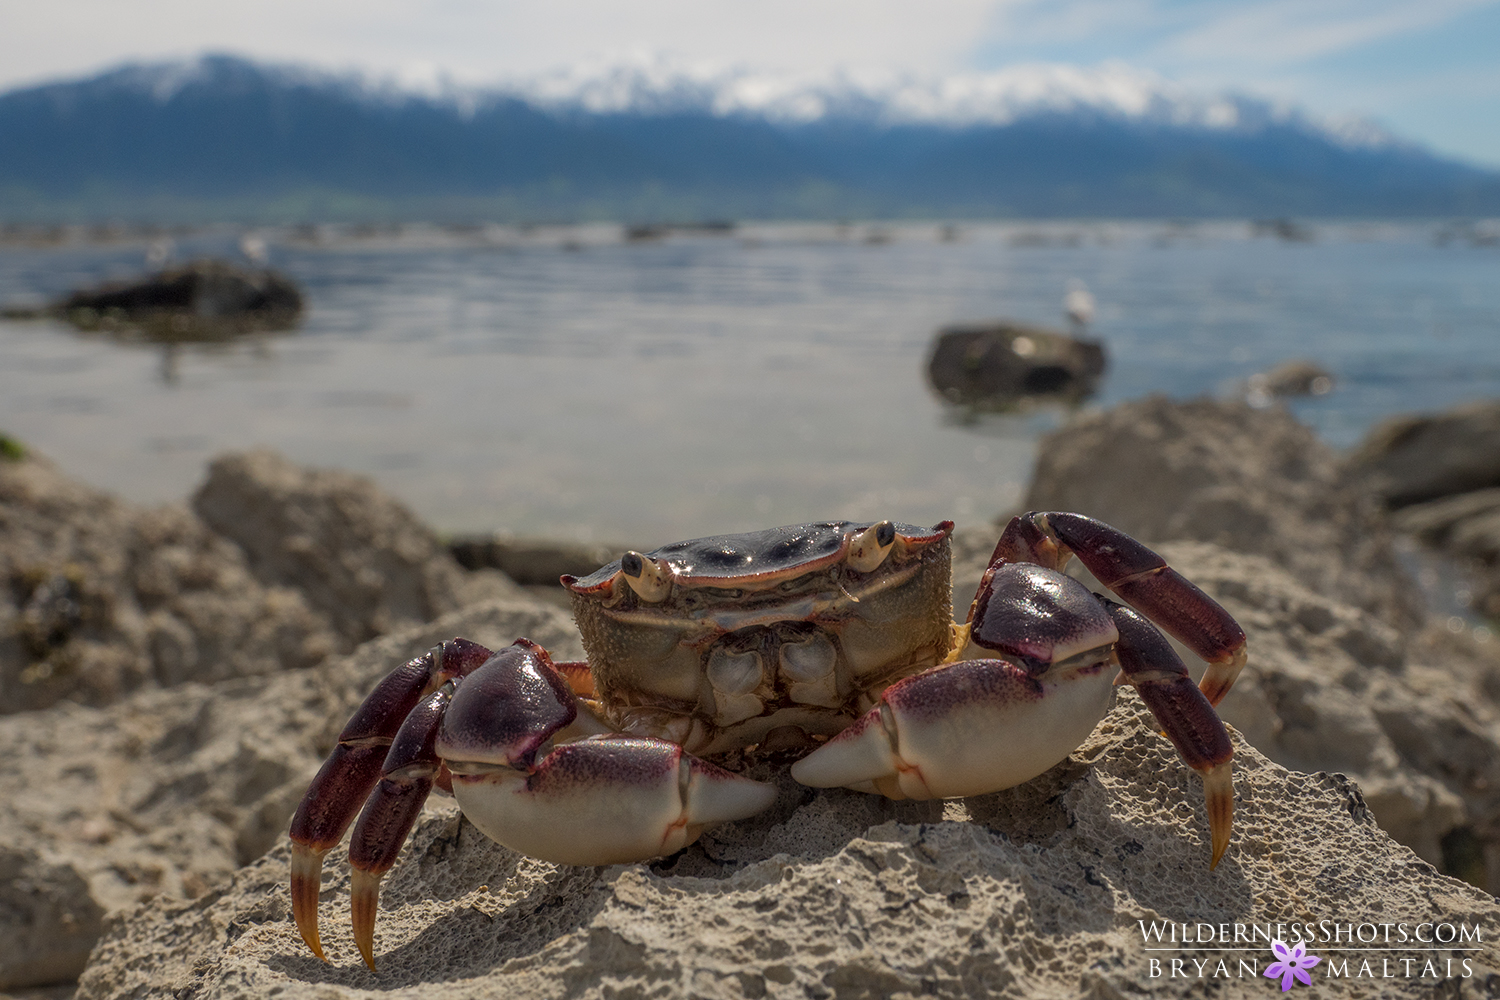 crab in habitat kaikoura new zealand